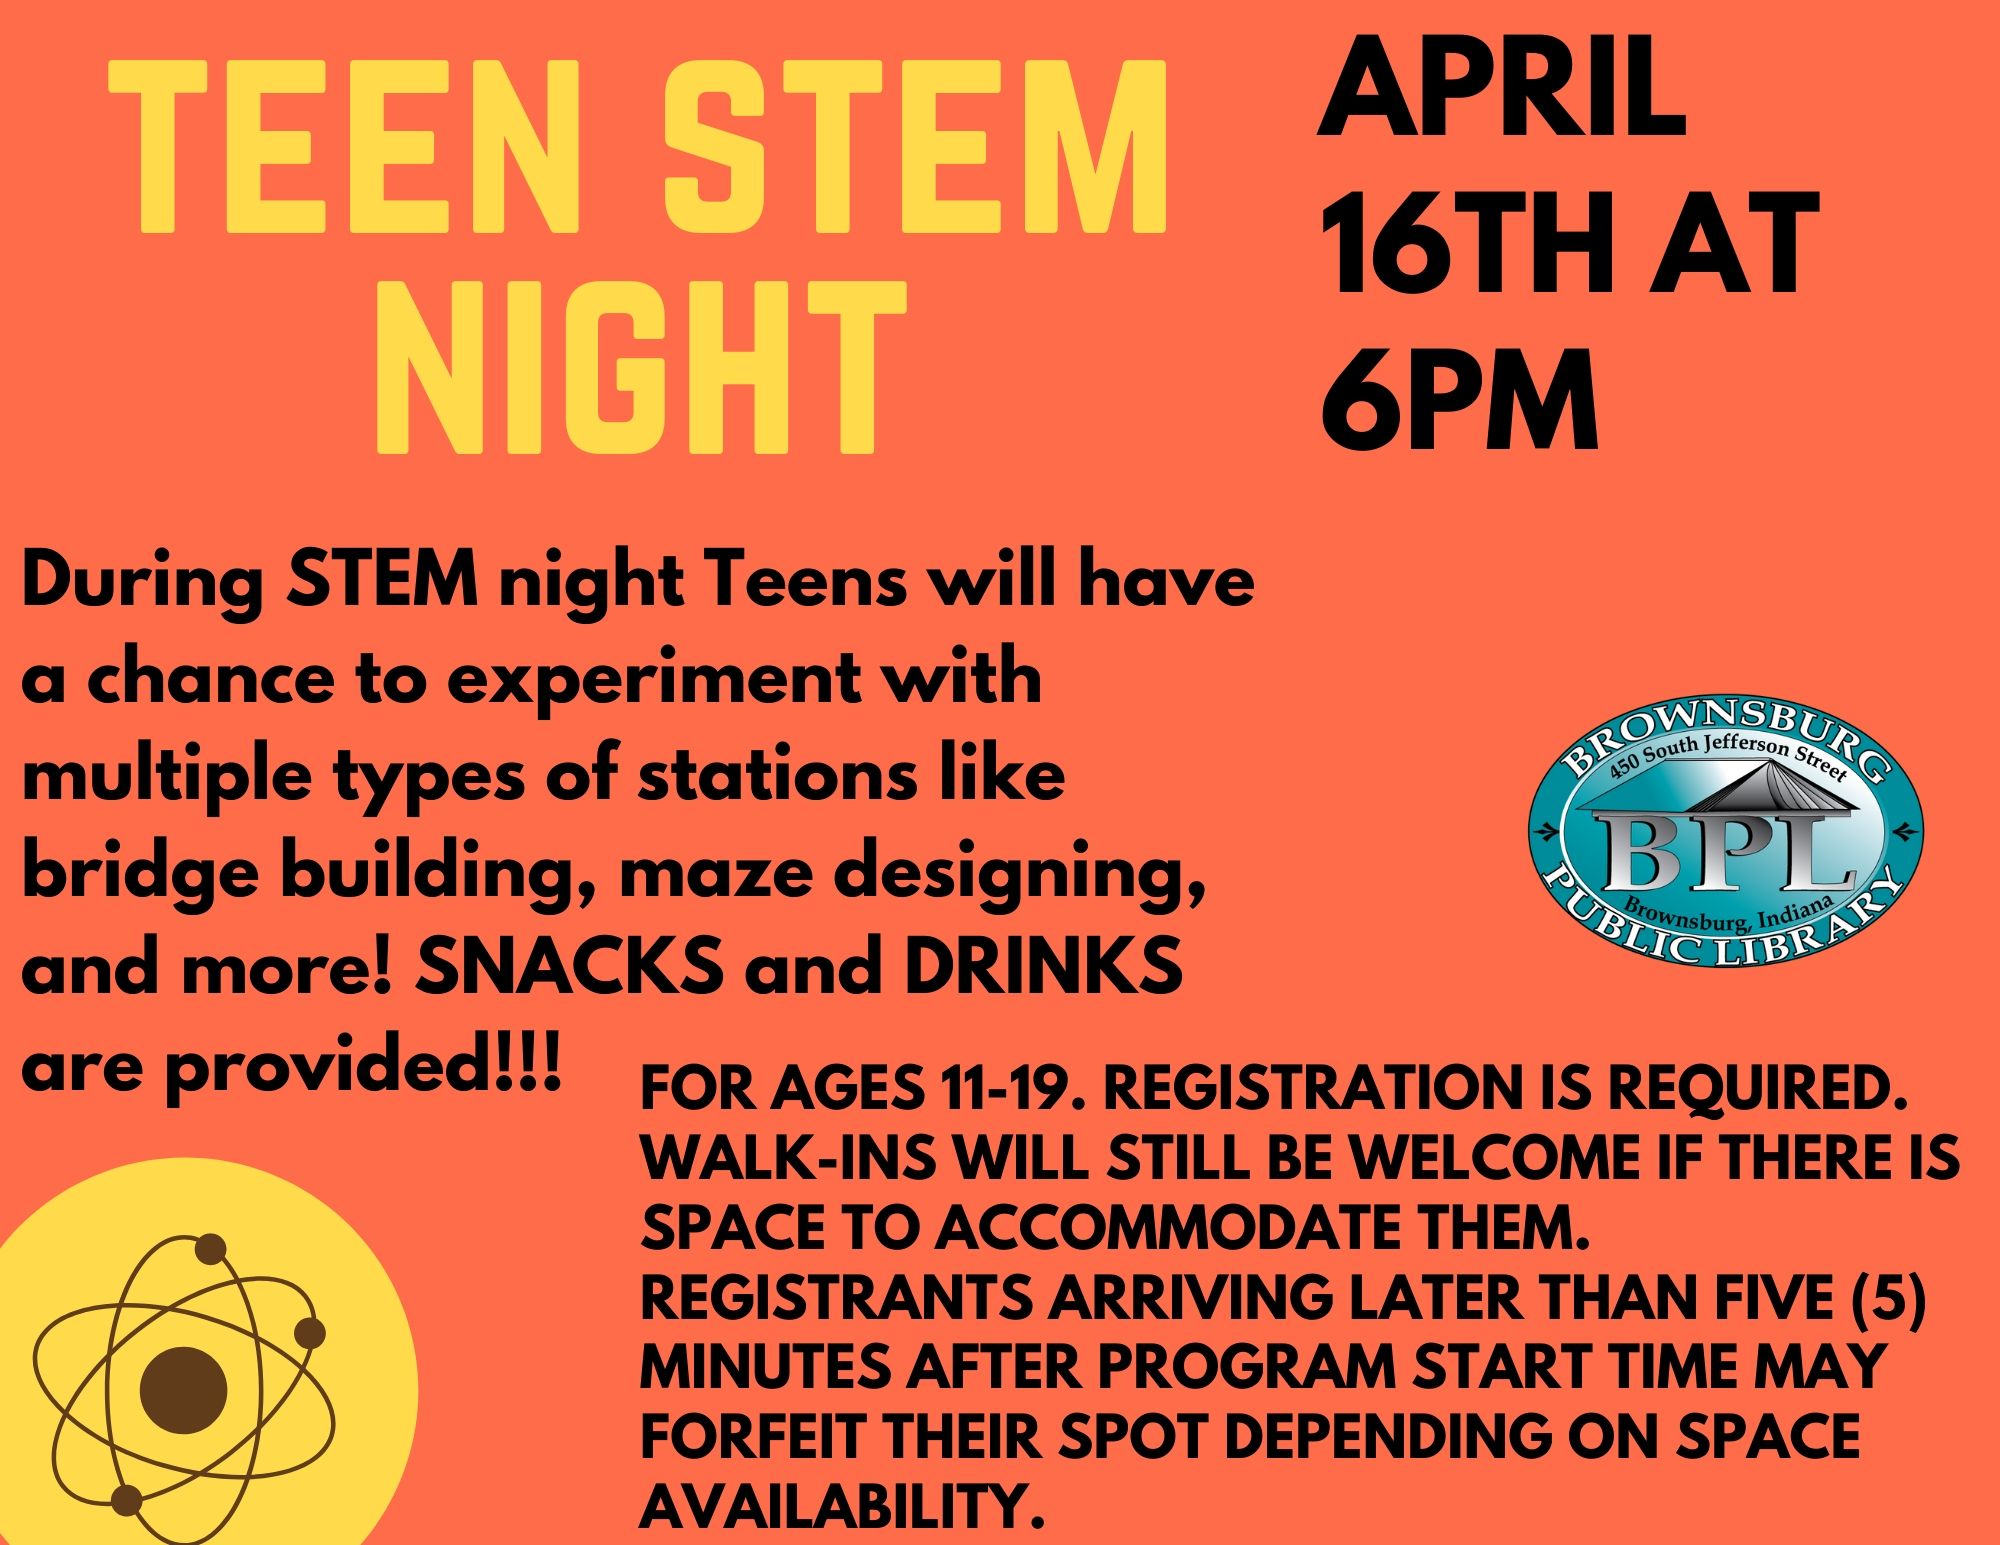 Teen STEM Night April 16th at 6pm